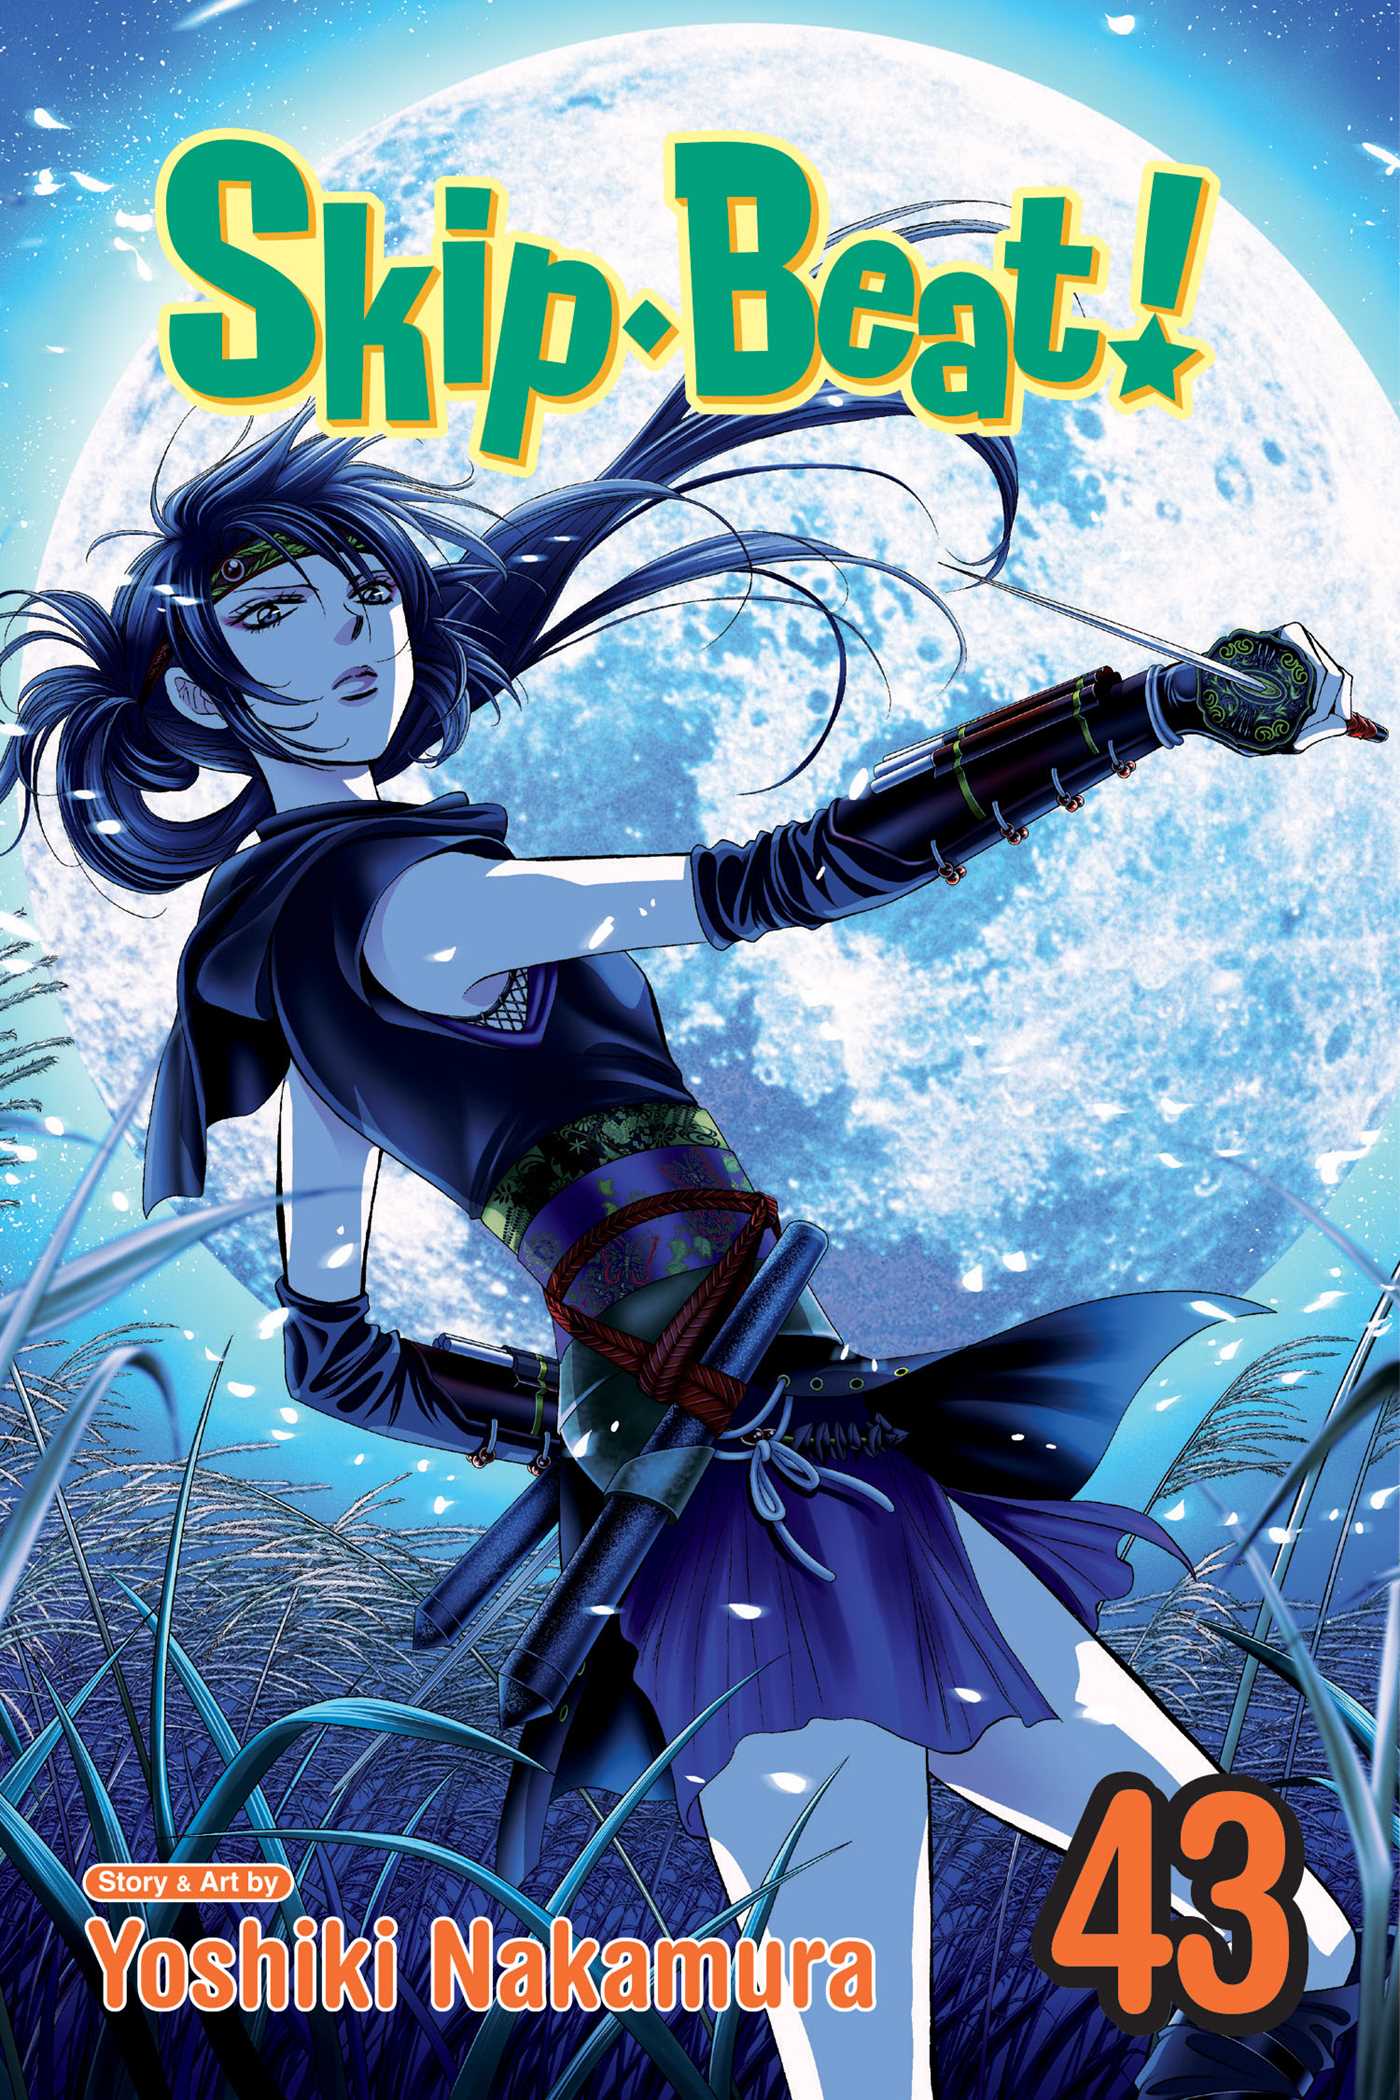 Skip Beat Manga Vol 1 Download